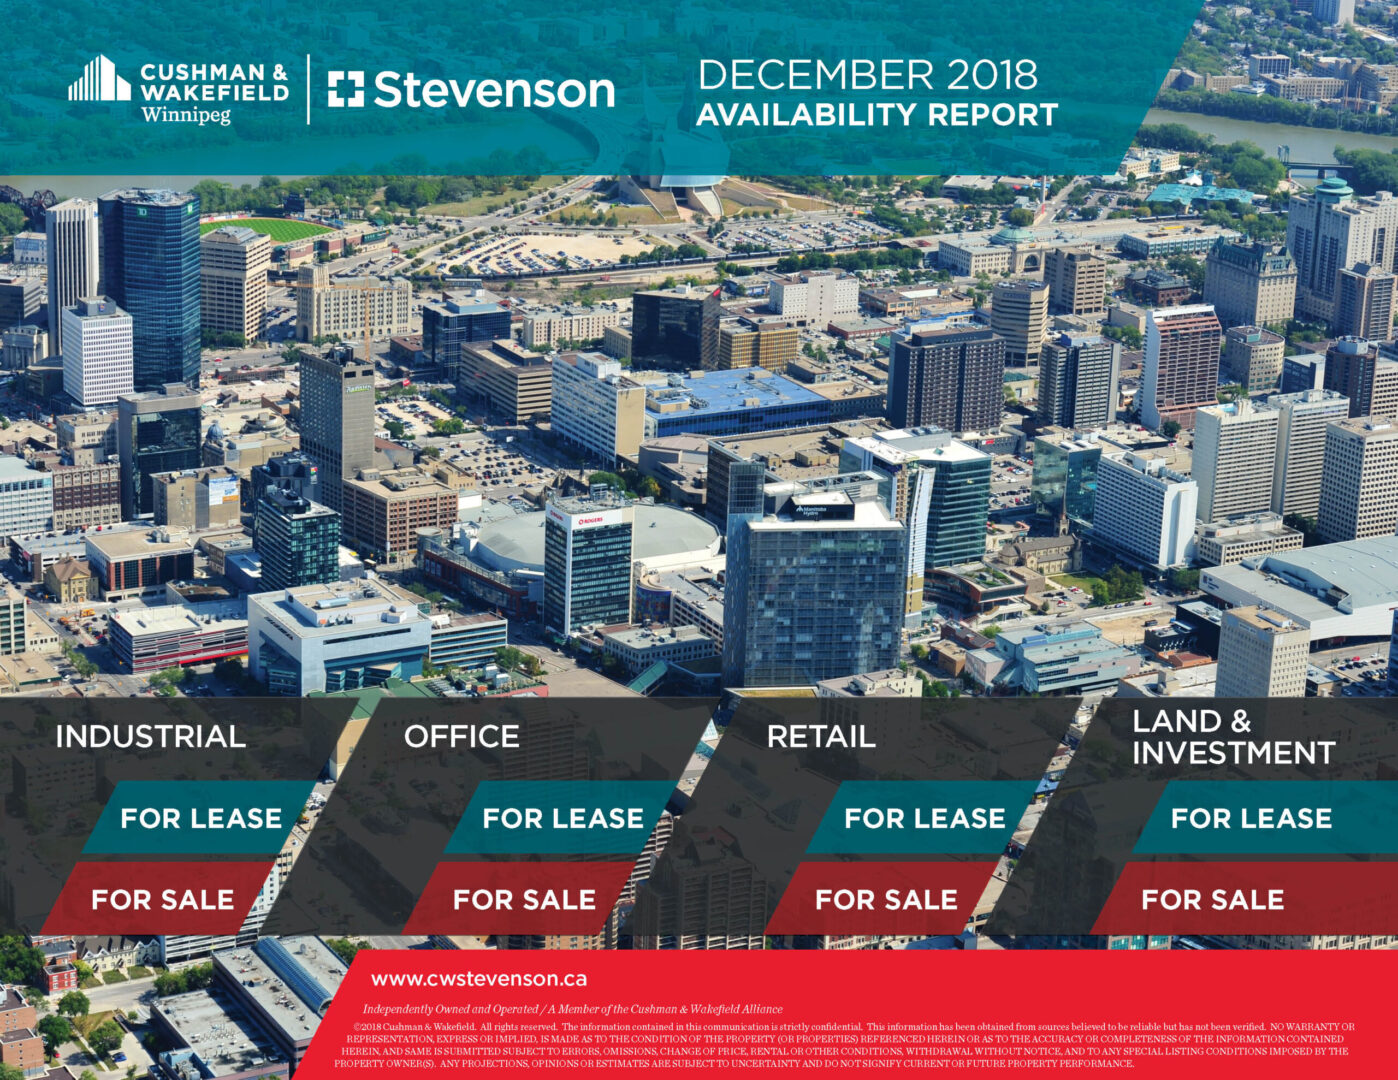 December 2018 availability report in winnipeg, cws cushman wakefield Stevenson